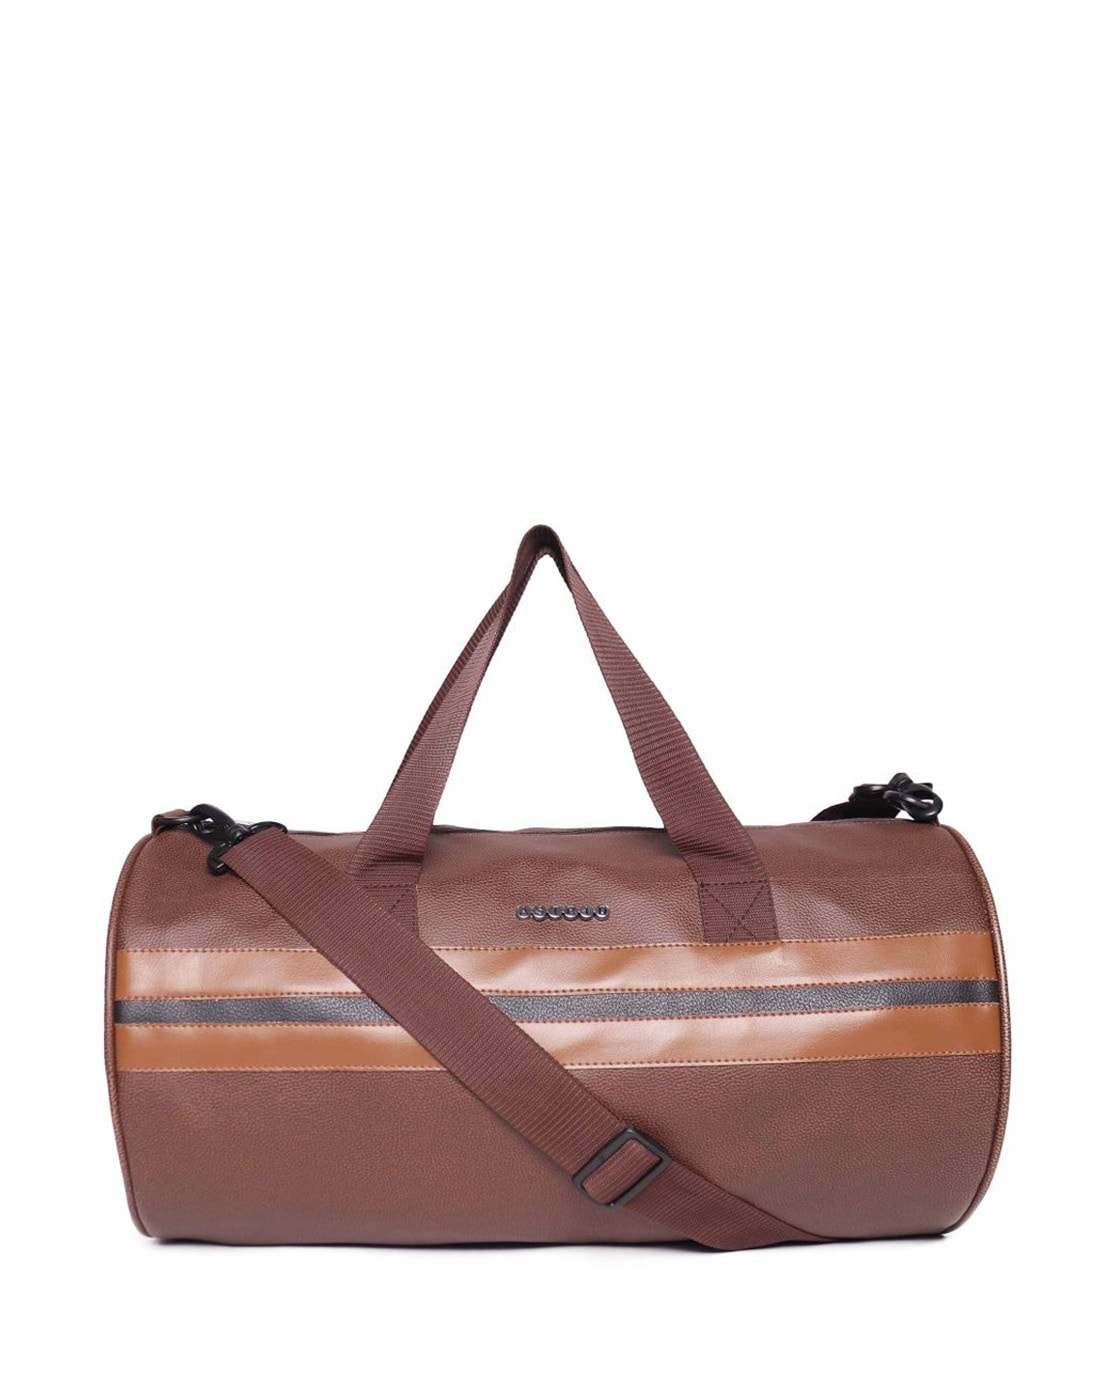 Buy Teal Travel Bags for Men by TEAKWOOD LEATHERS Online  Ajiocom